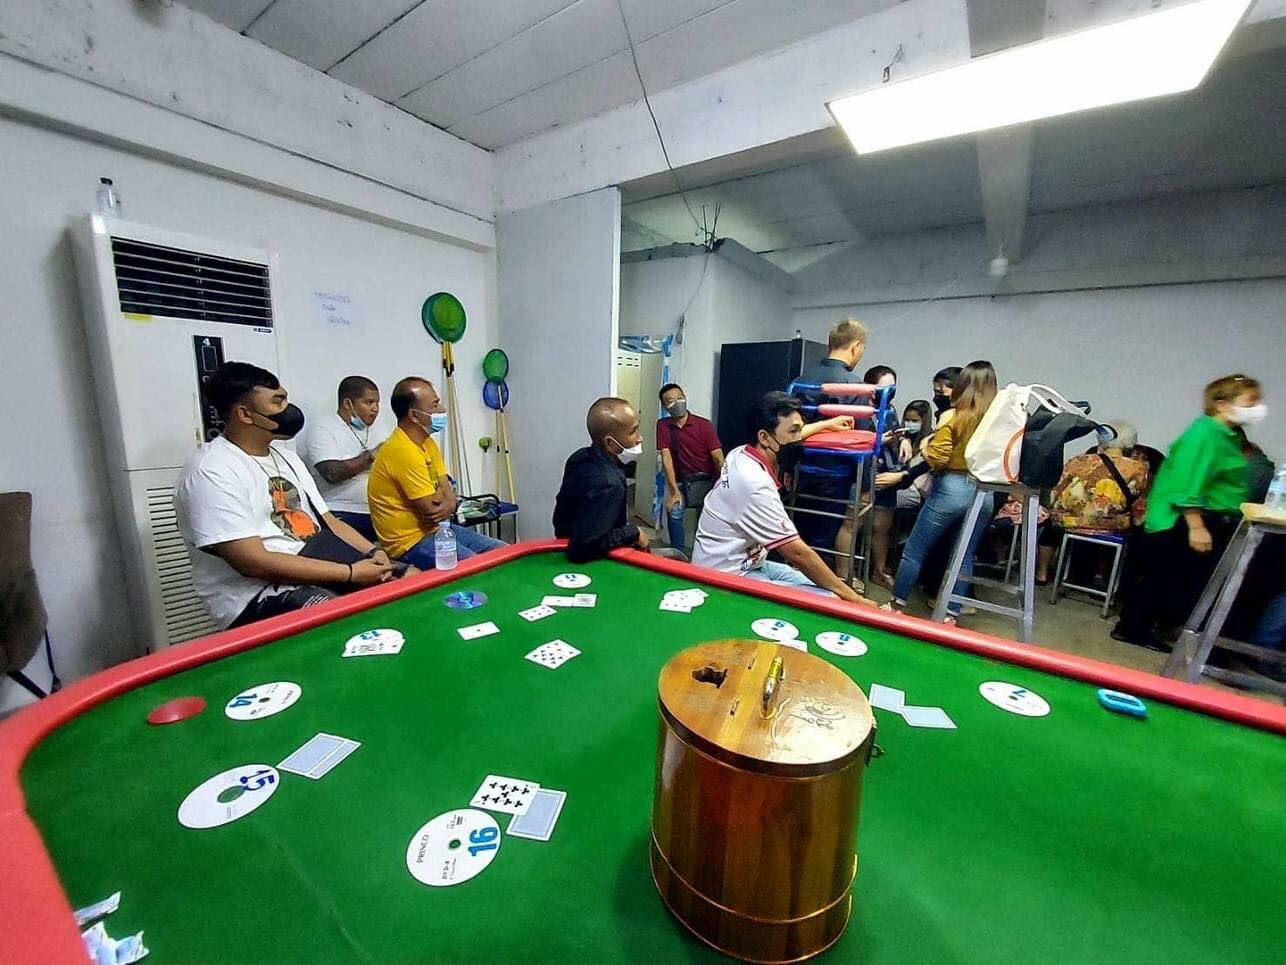 Bangkok gambling den bust sees five police officers transferred